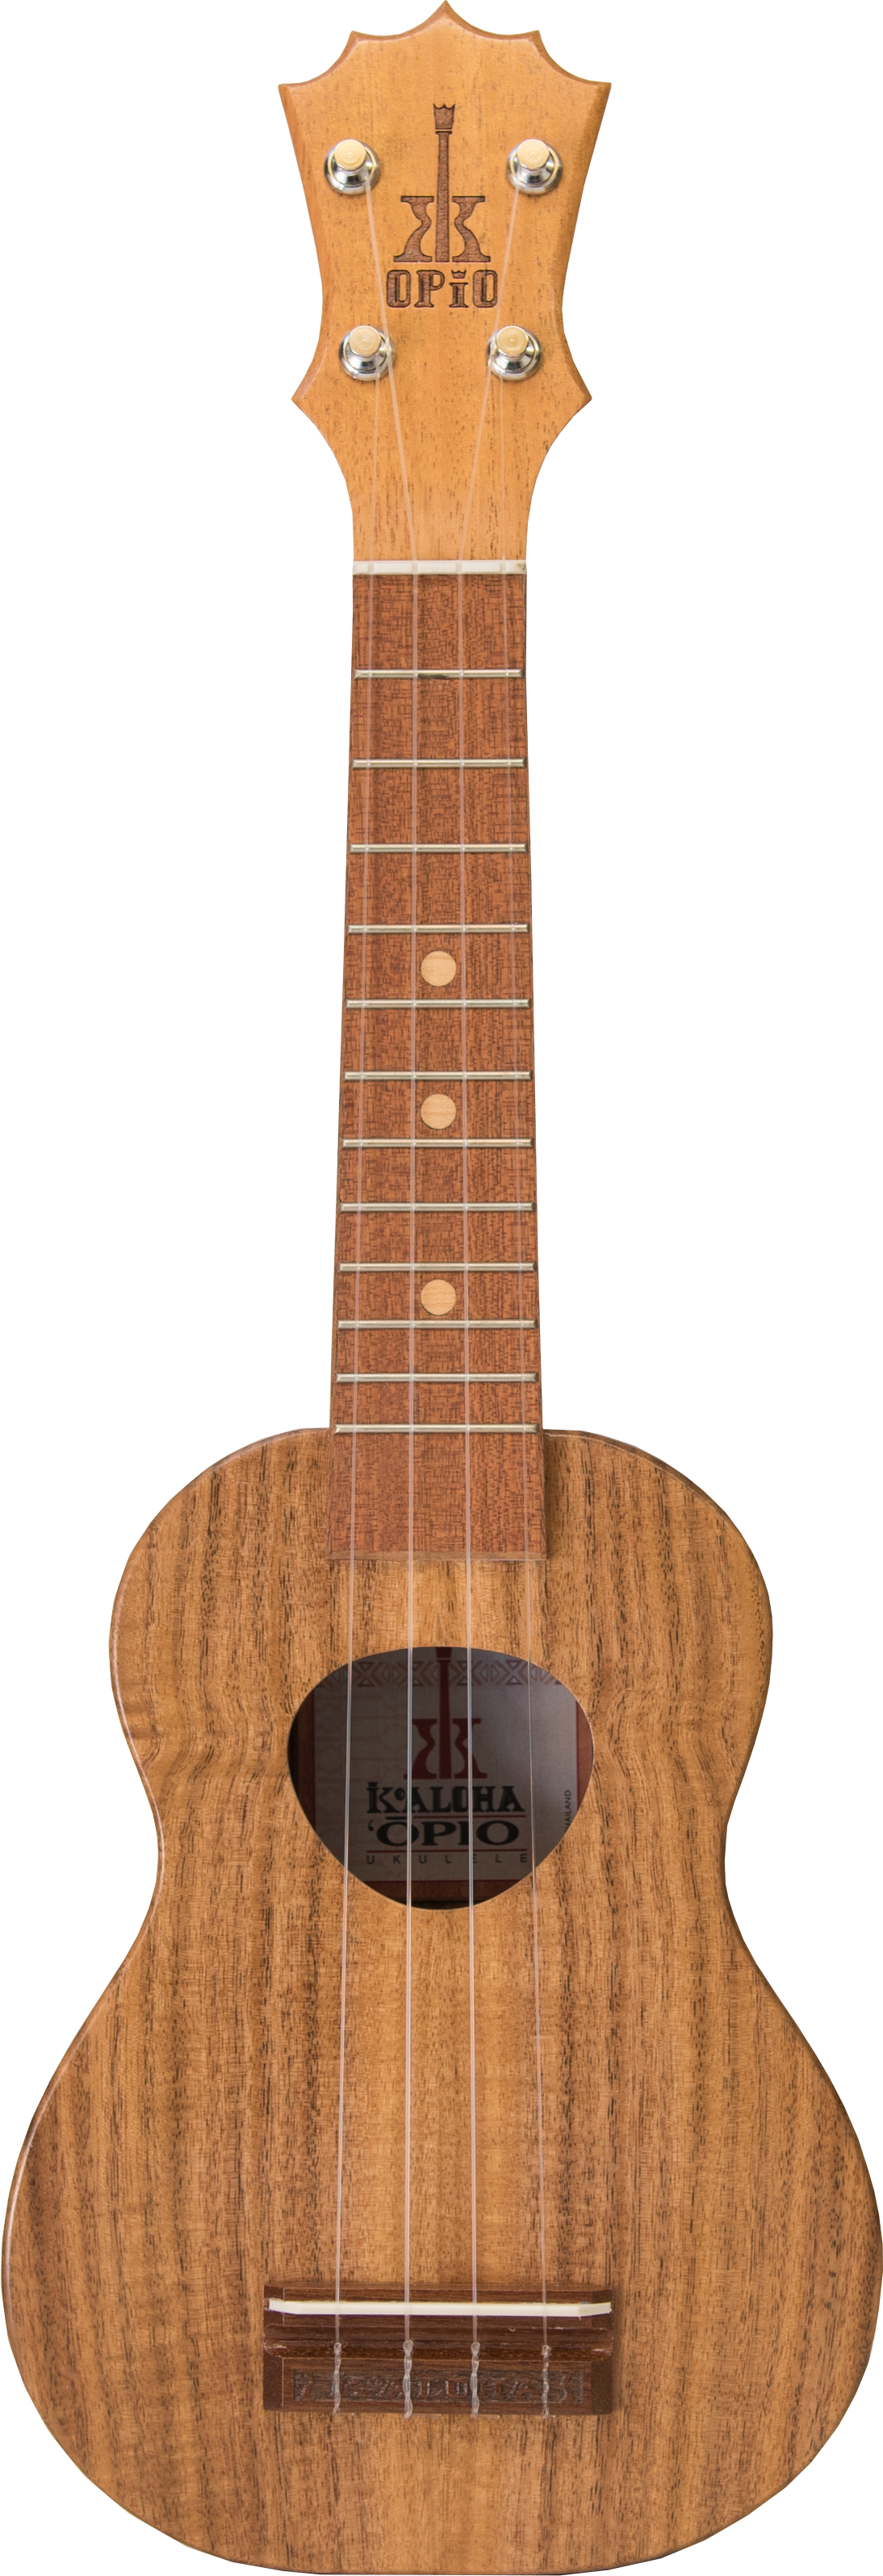 Koaloha Opio Acacia Wood Soprano Ukulele $500 - Acoustic Guitar (1094x3191), Png Download